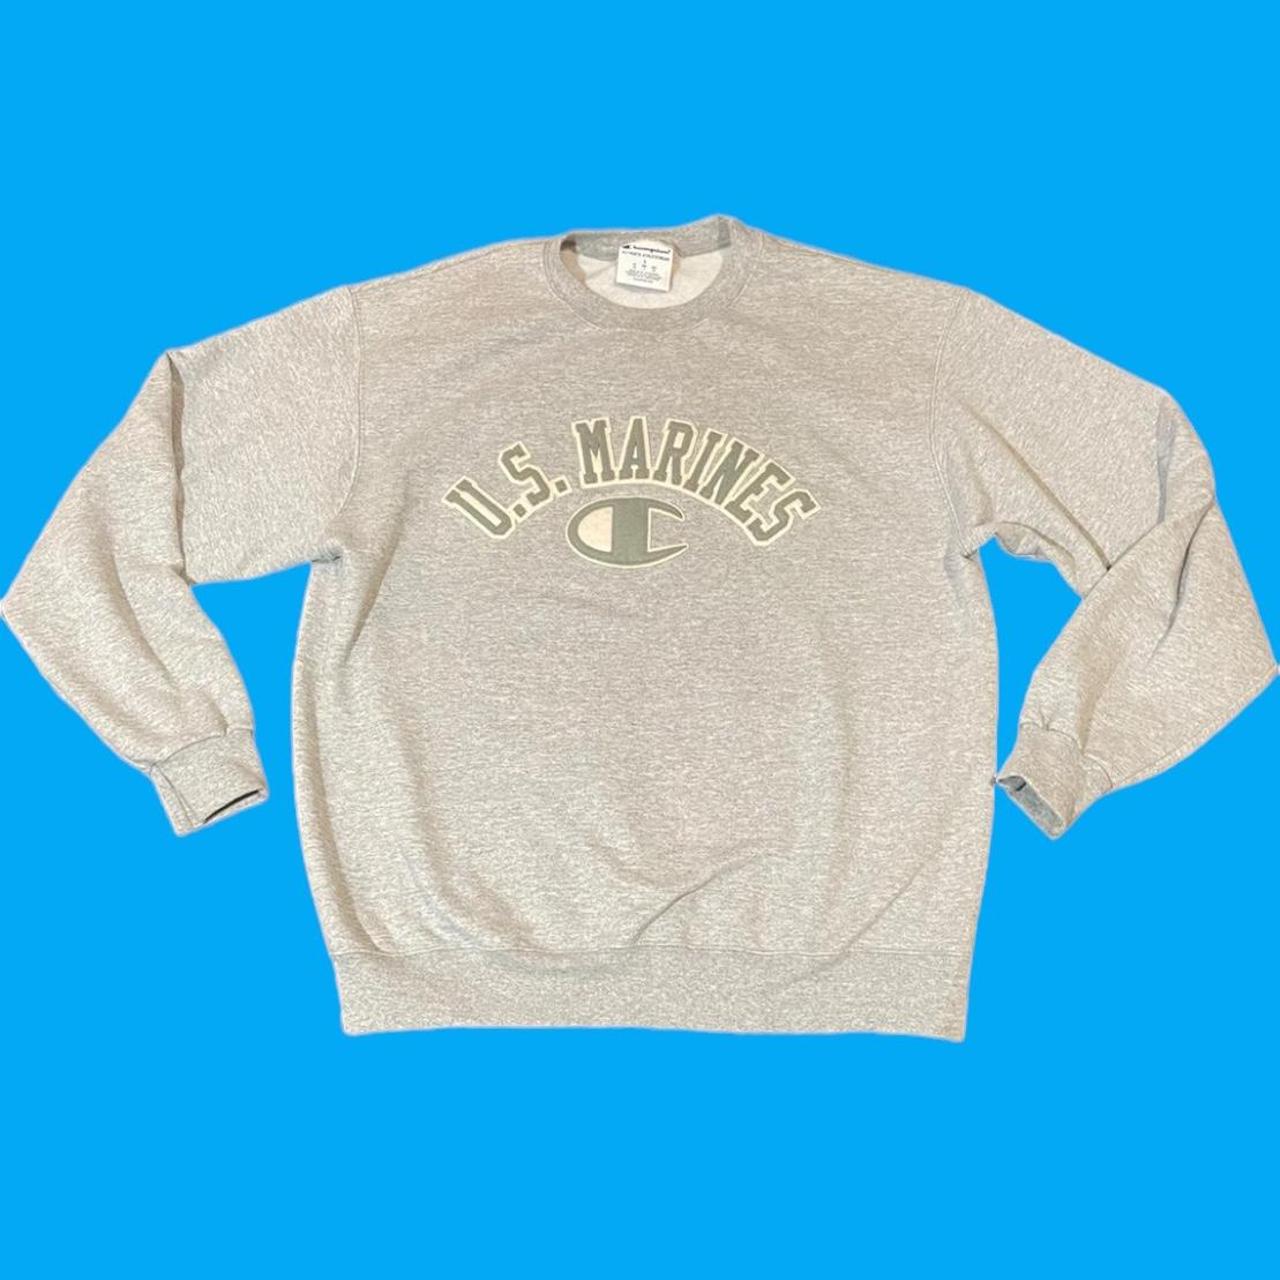 80s MARINES Champion vintage sweat shirtこの機会をお見逃しなく